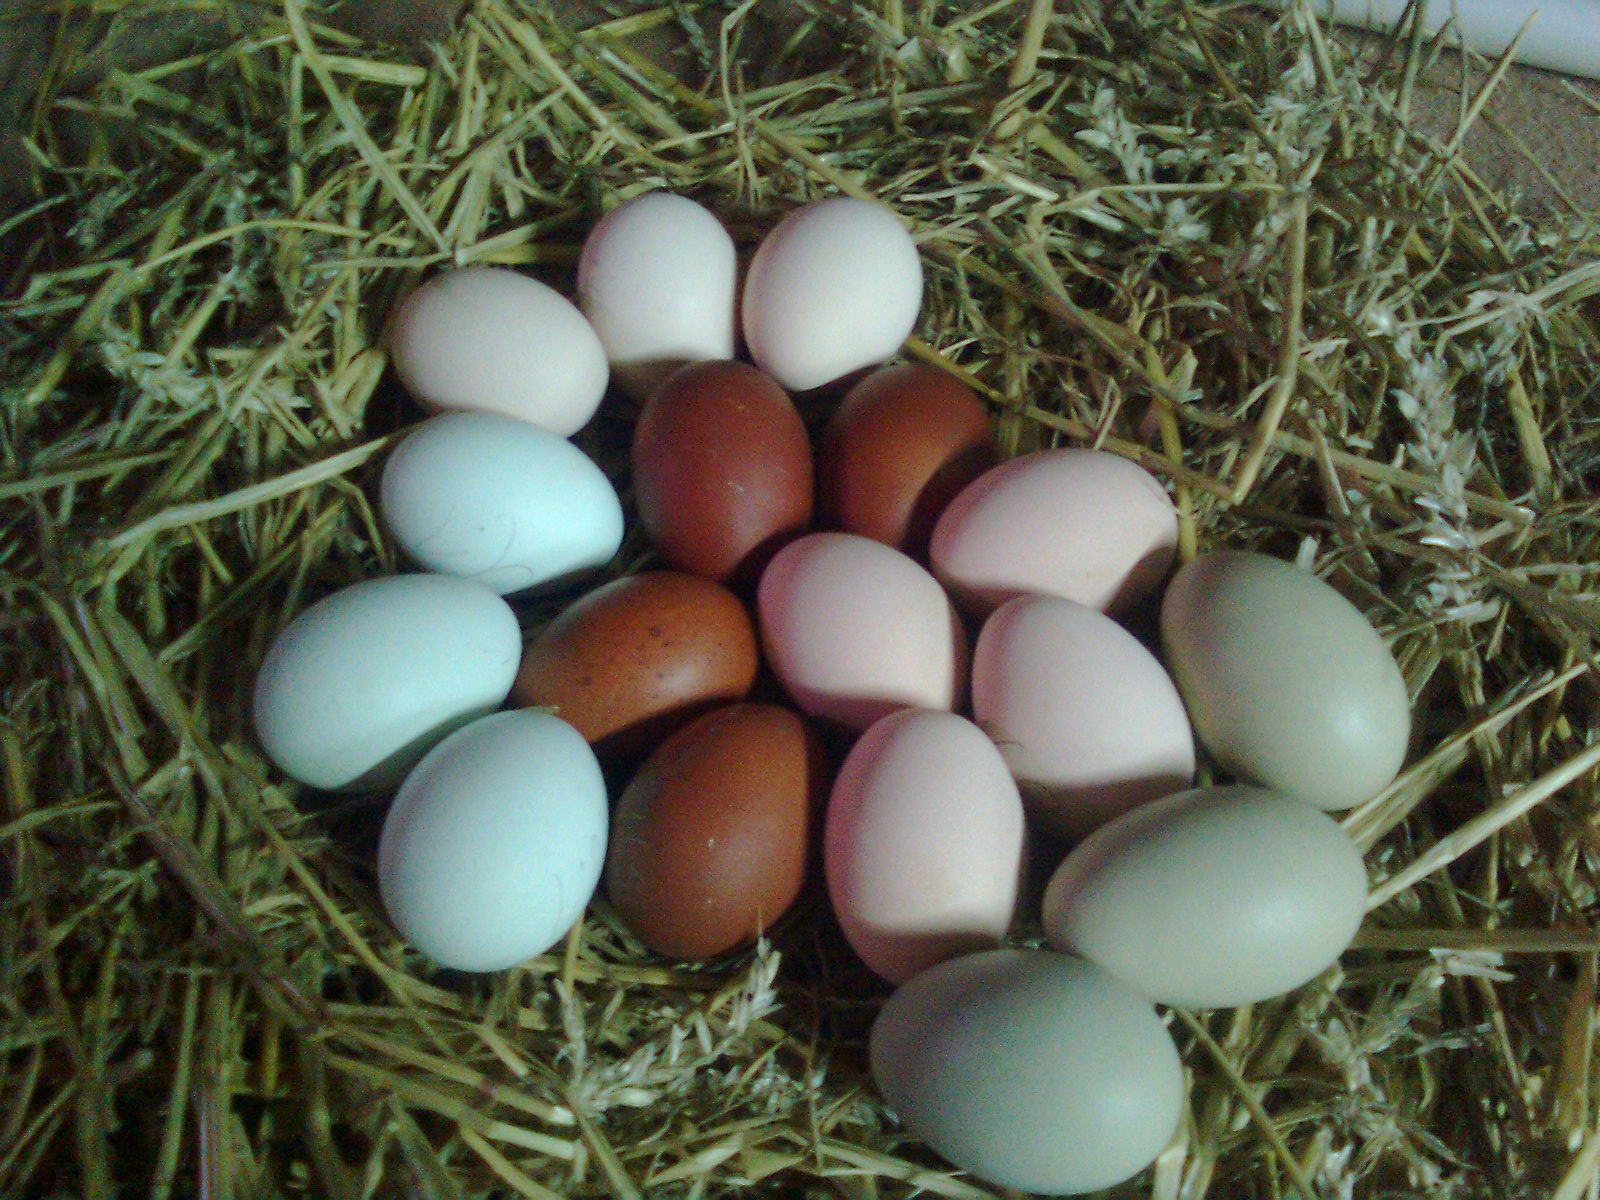  Bruteier abzugeben,
Hühner-Eier 2,00€-3,00€
Enten-Eier 3,00€-3,50€
Gänse-Eier 7,00€ pro Stück.
Versand von Bruteiern ist möglich, bundesweit 8,00€.
 Dispatch of hatching eggs is 
possible, EU countries € 18.50